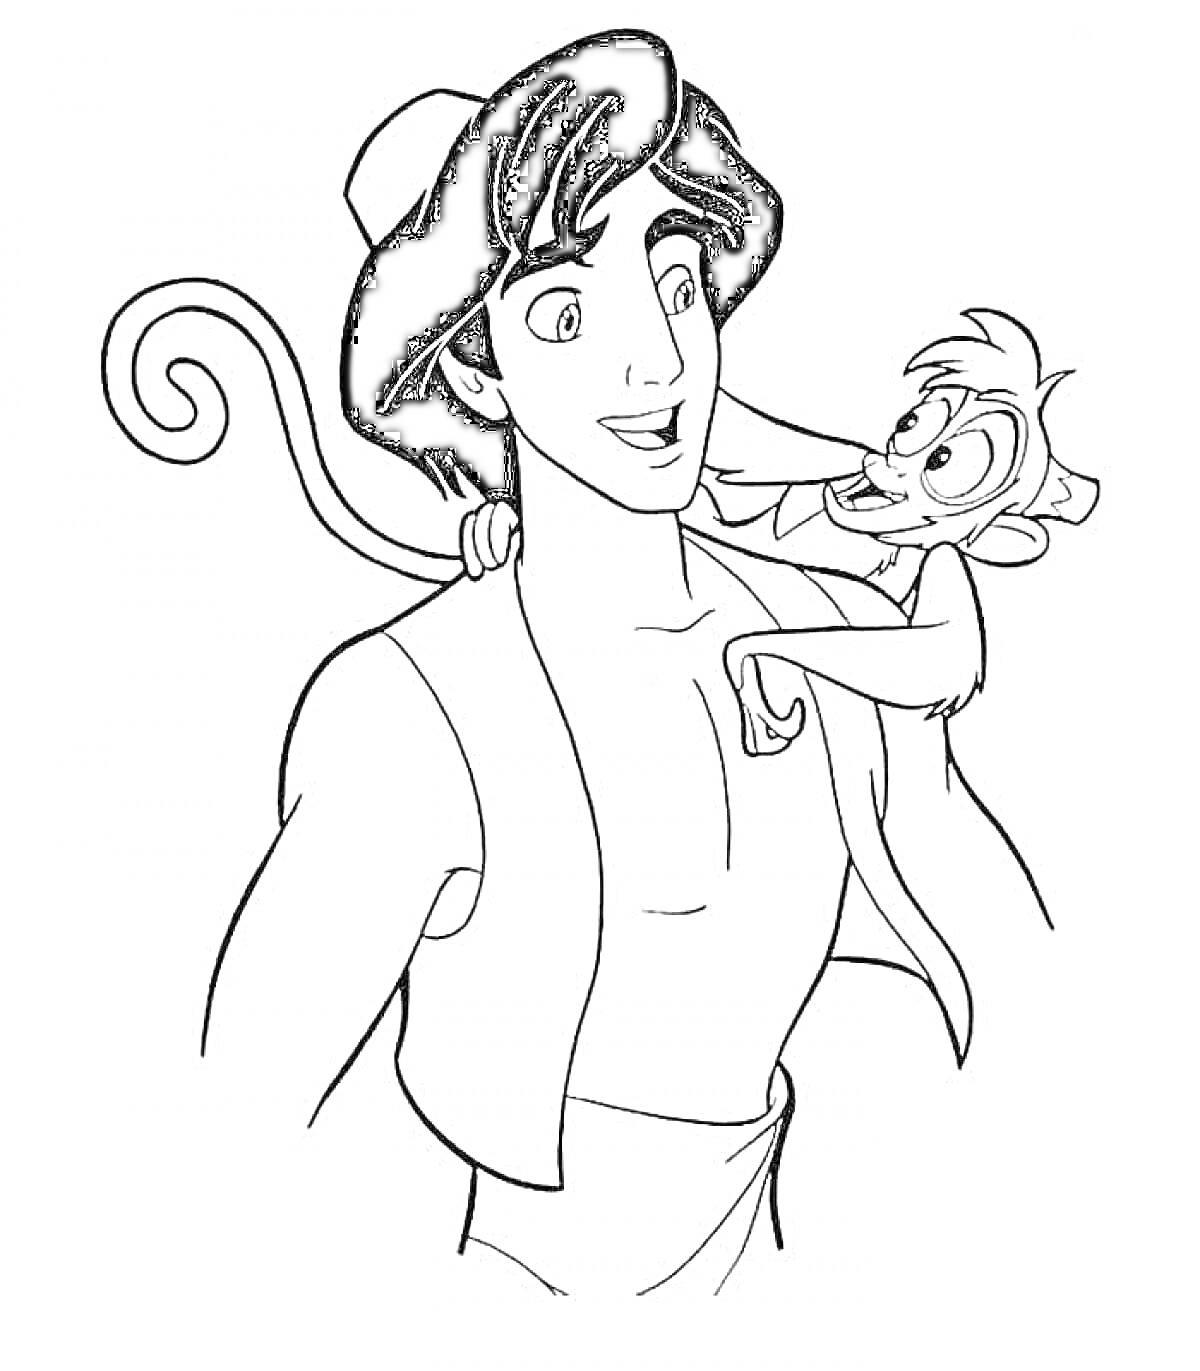 Раскраска Аладдин с обезьяной на плече